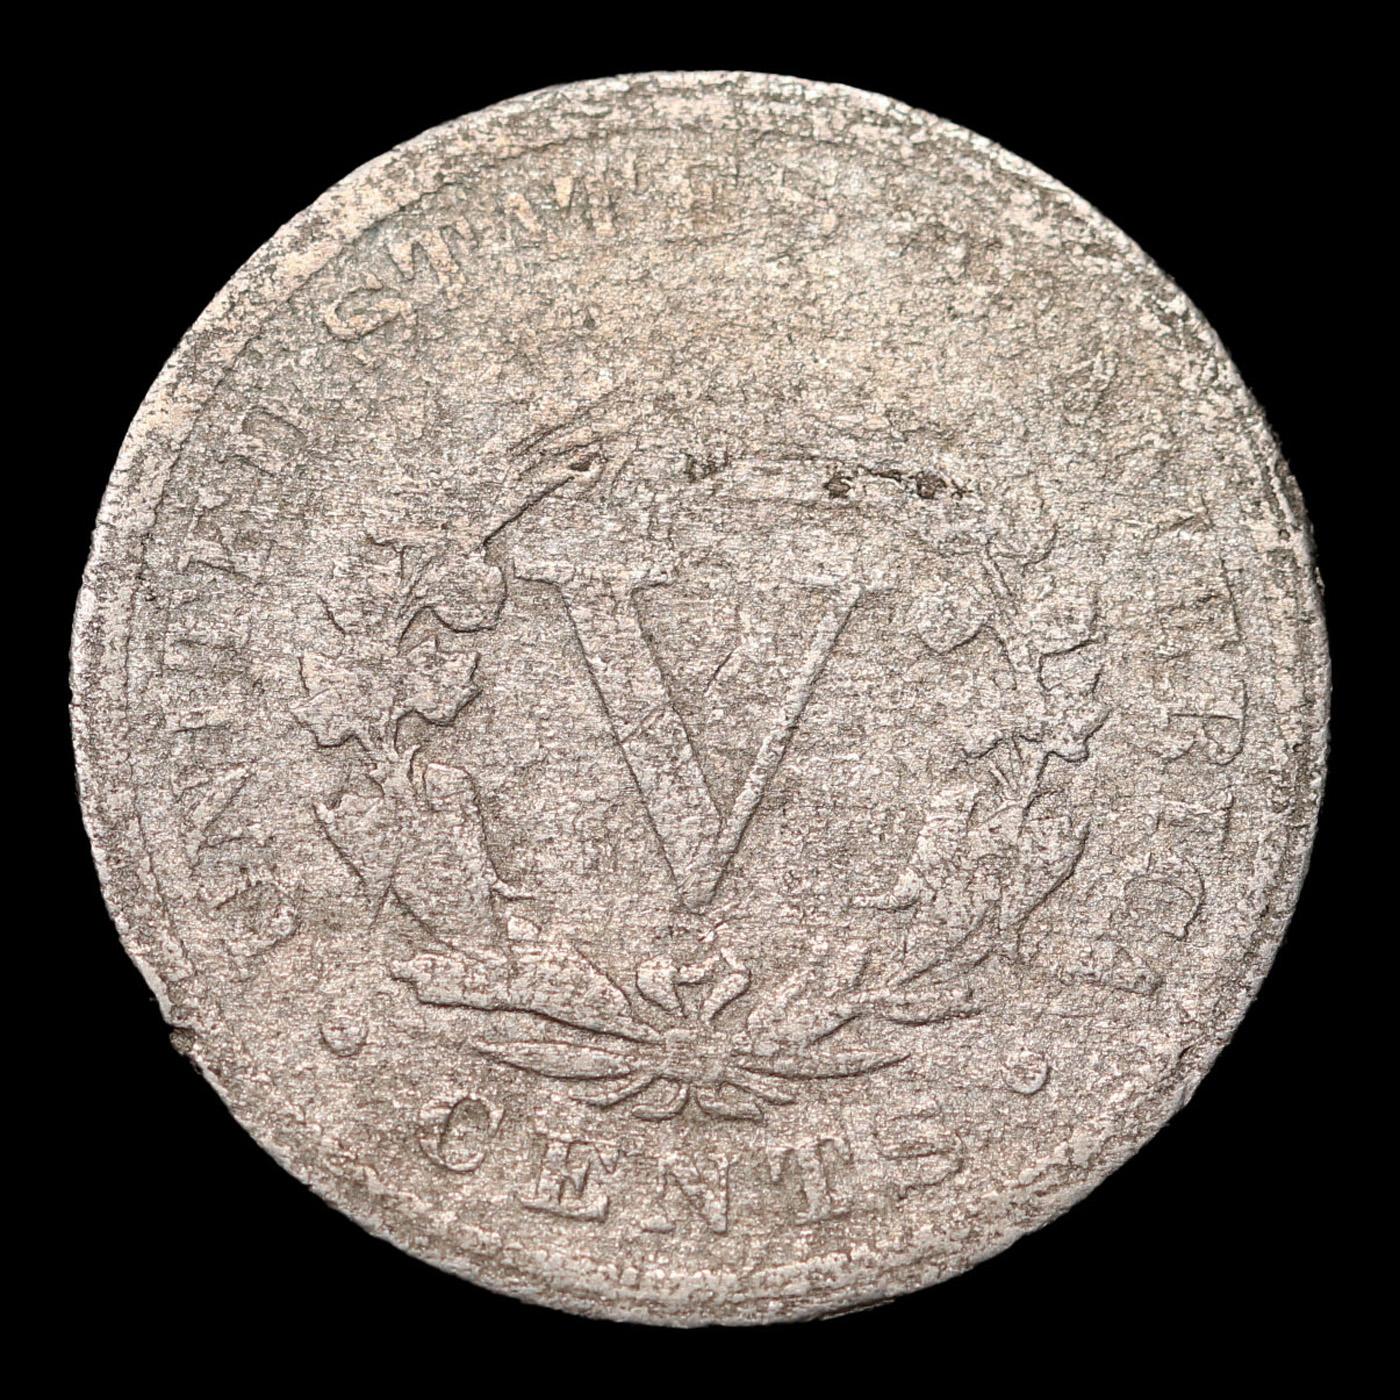 1886 Liberty Nickel 5c Grades vg details